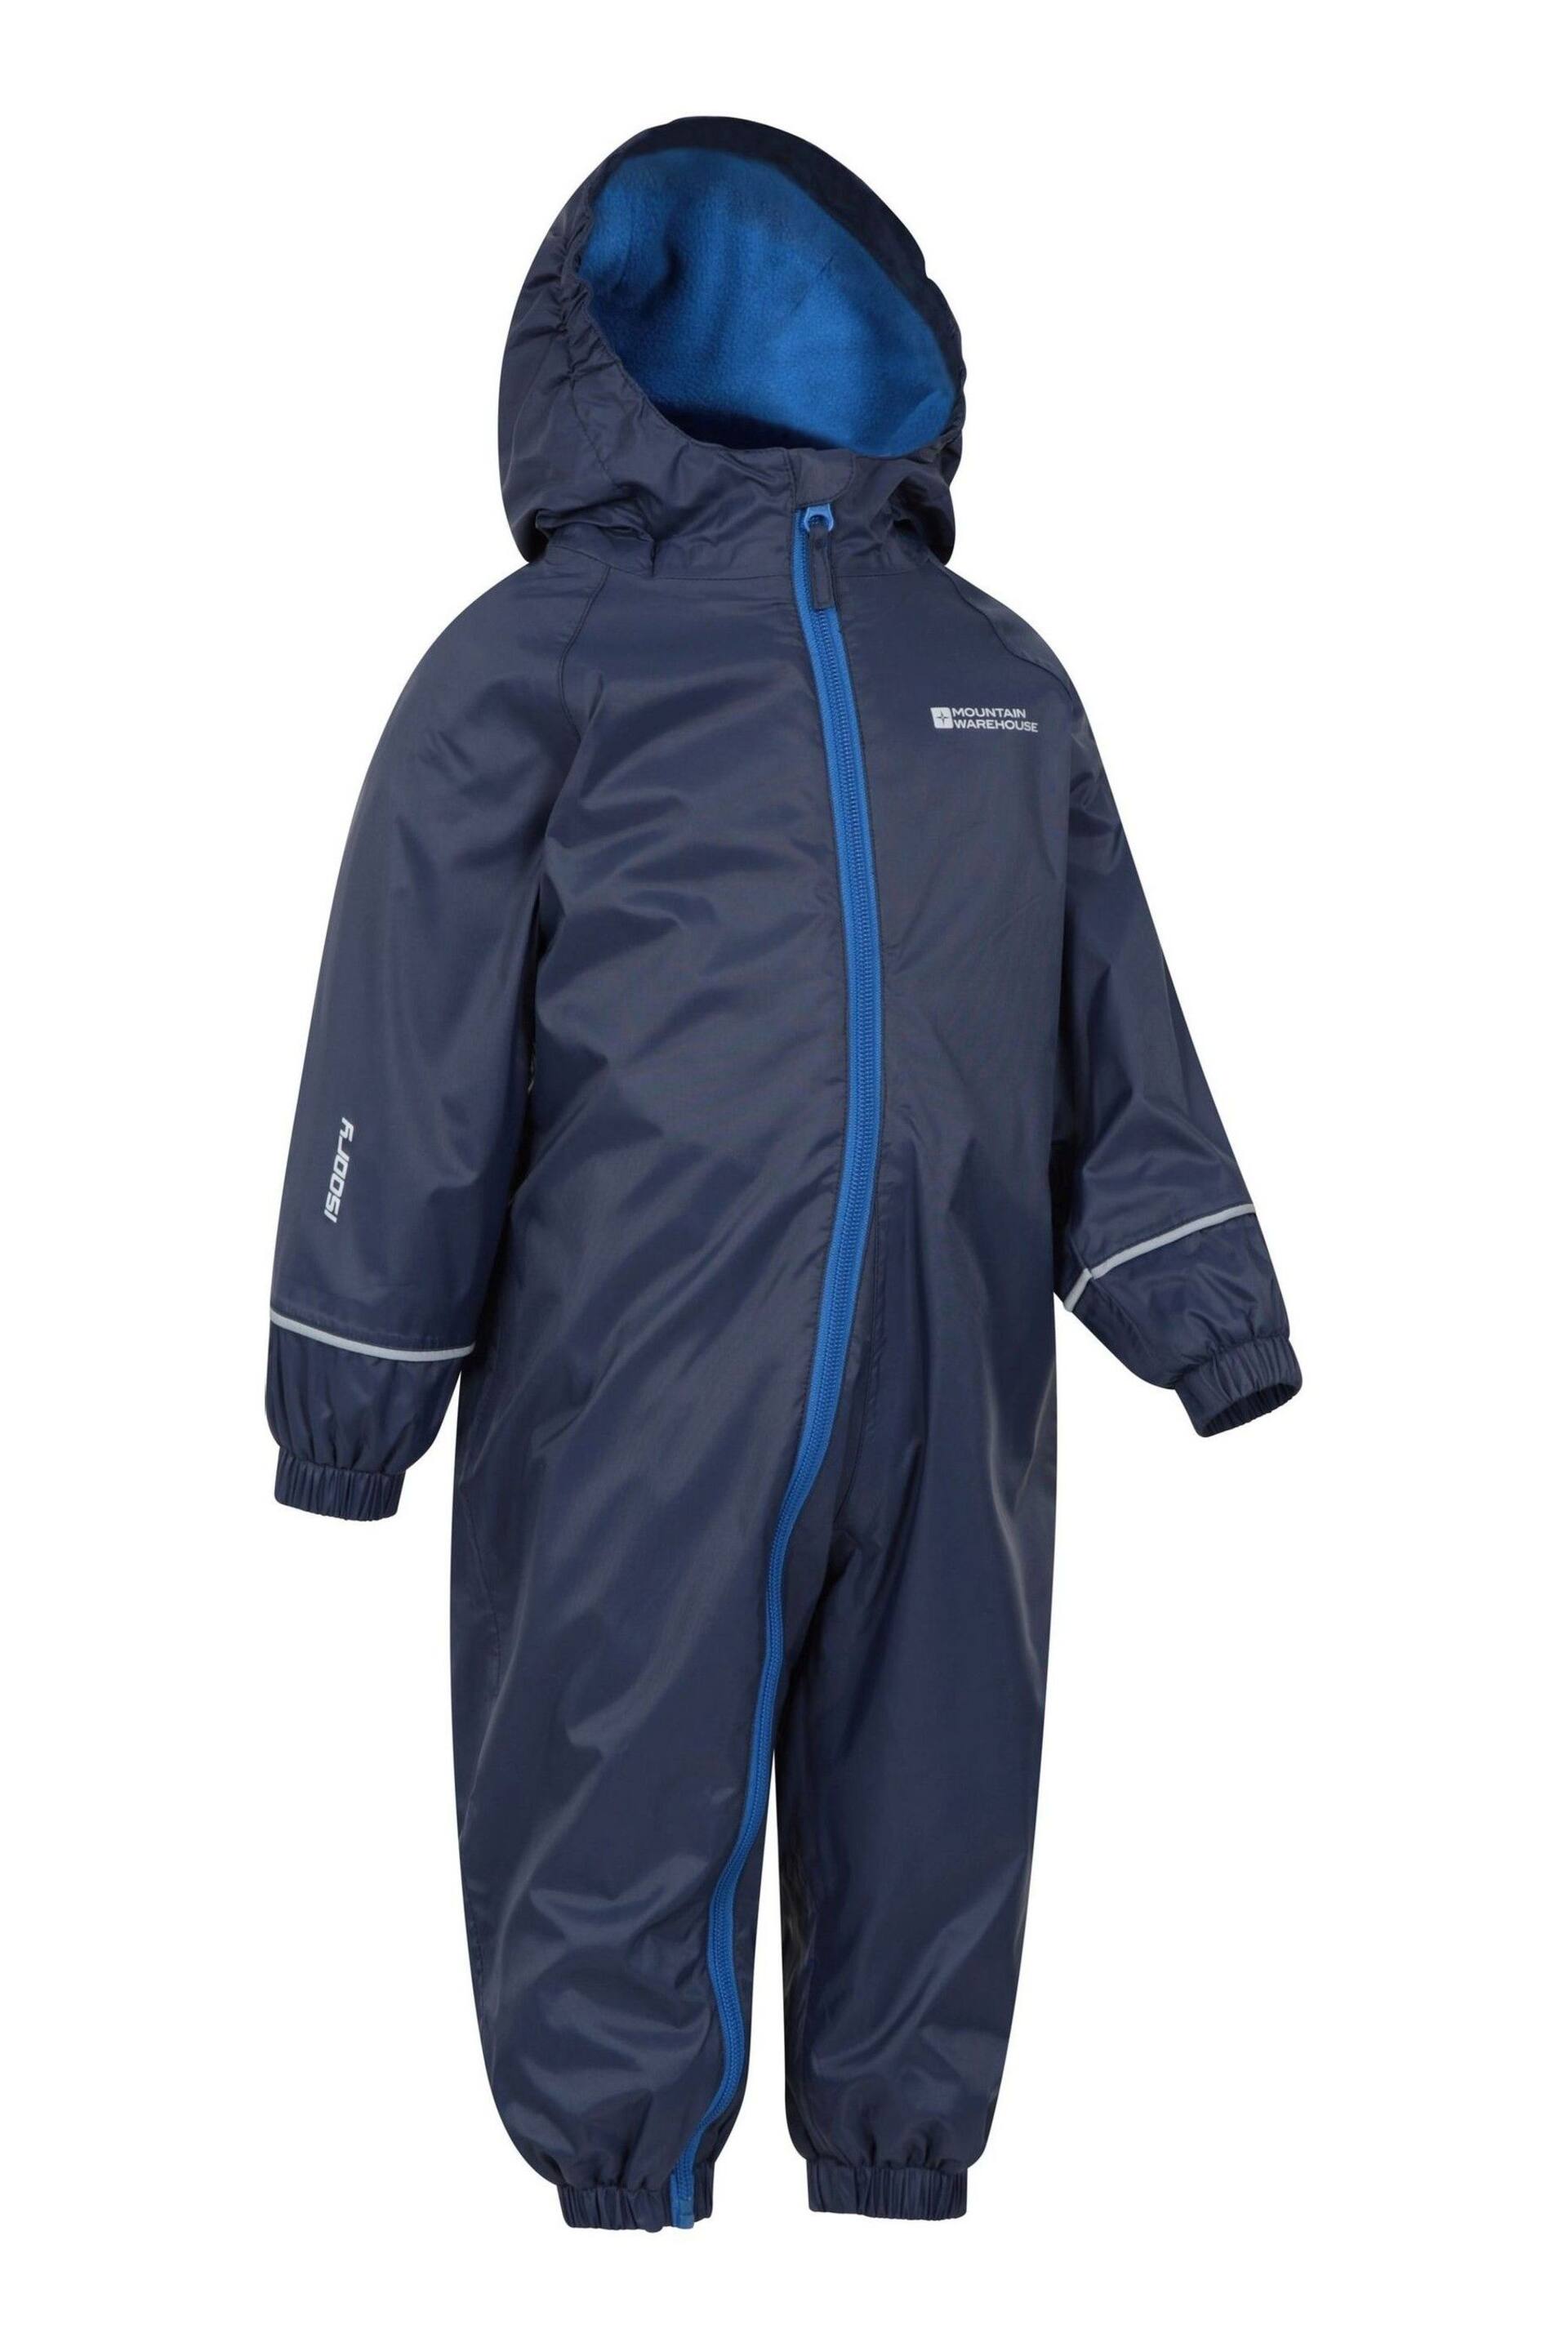 Mountain Warehouse Blue Junior Spright Waterproof Fleece Lined Rainsuit - Image 2 of 5